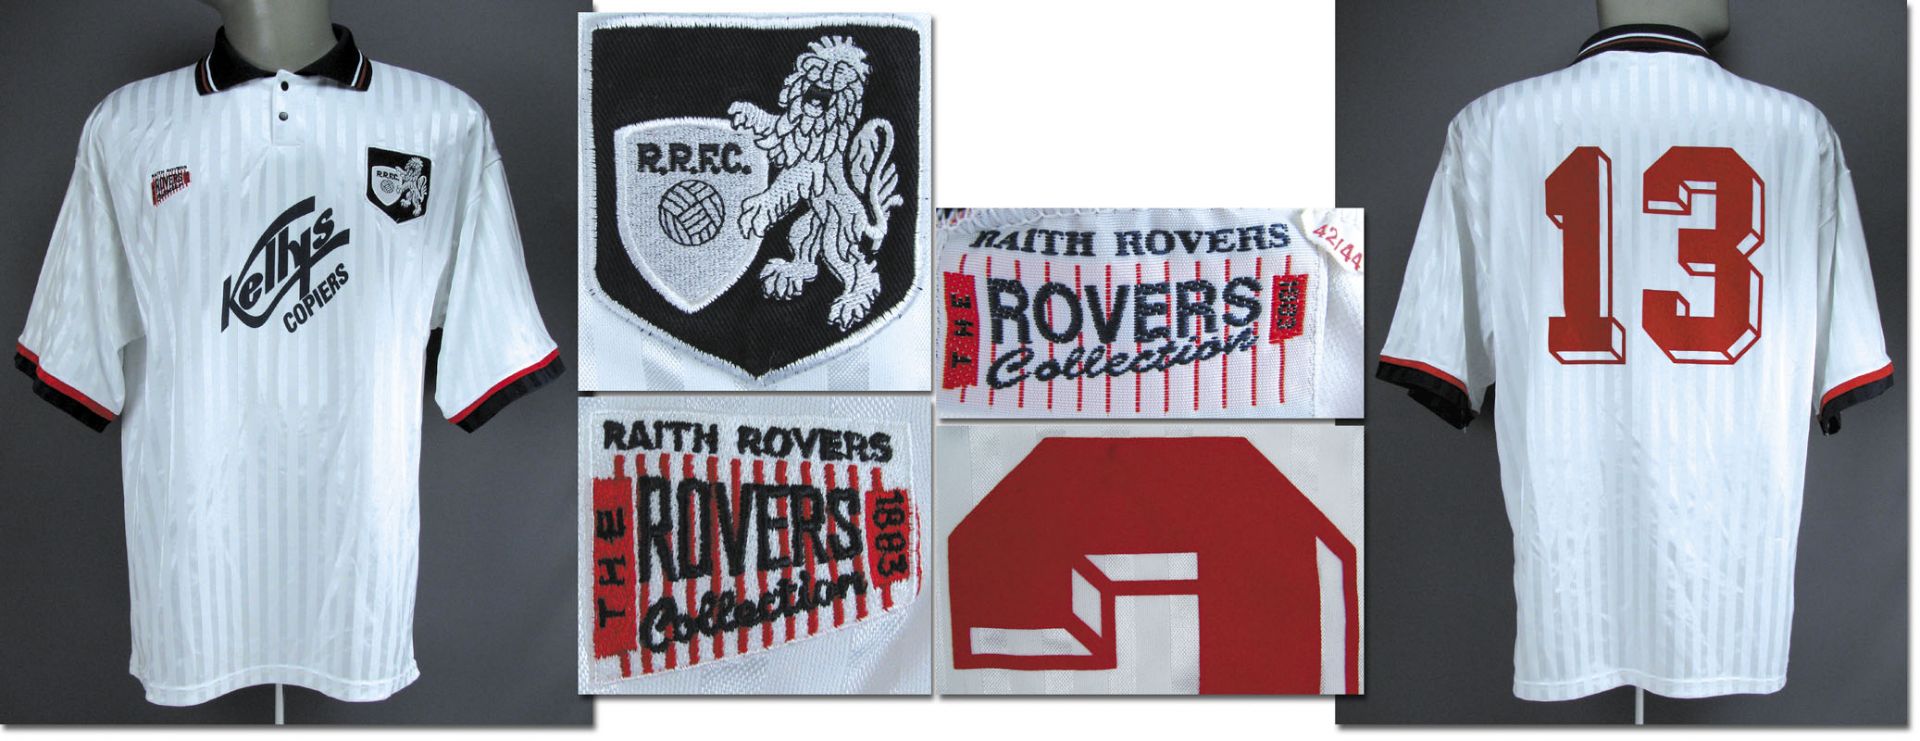 match worn football shirt Raith Rovers 1995/96 - Original match worn shirt Raith Rovers FC with numb